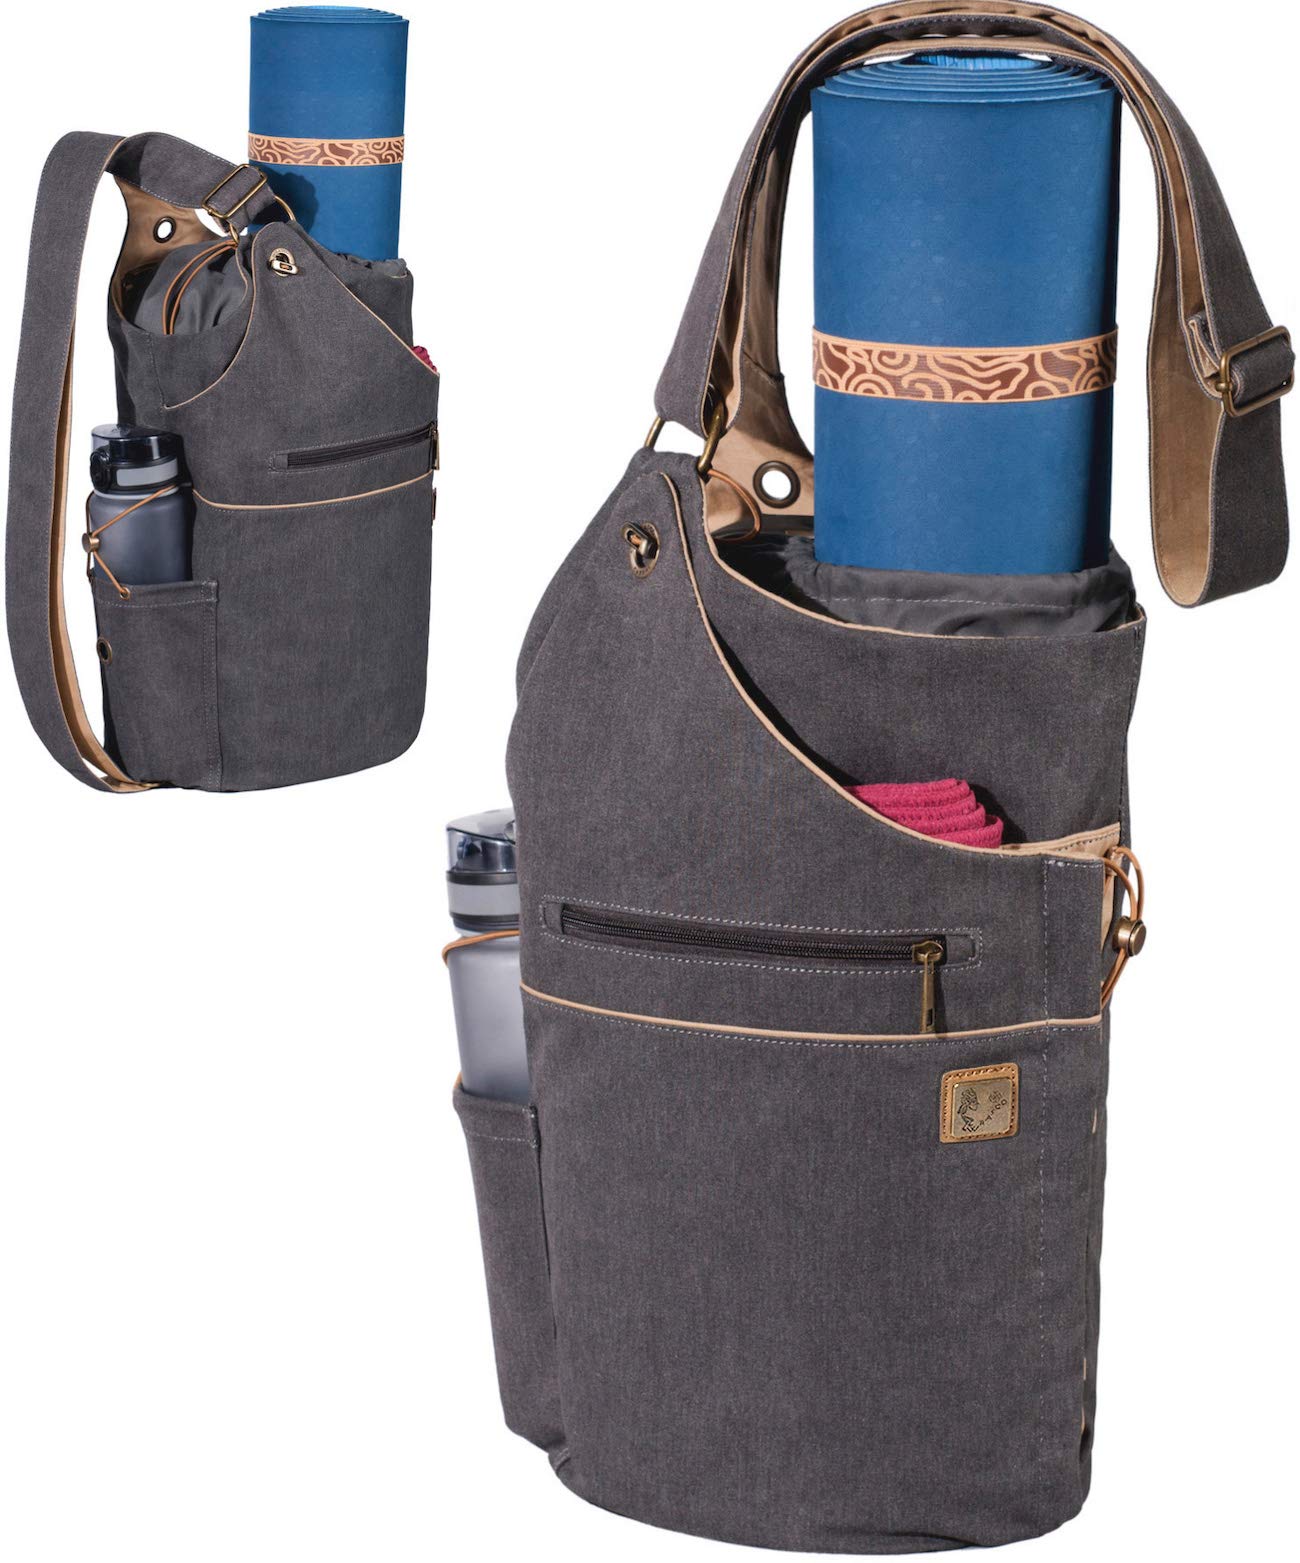 Wrasco Yoga Mat Carry Bag